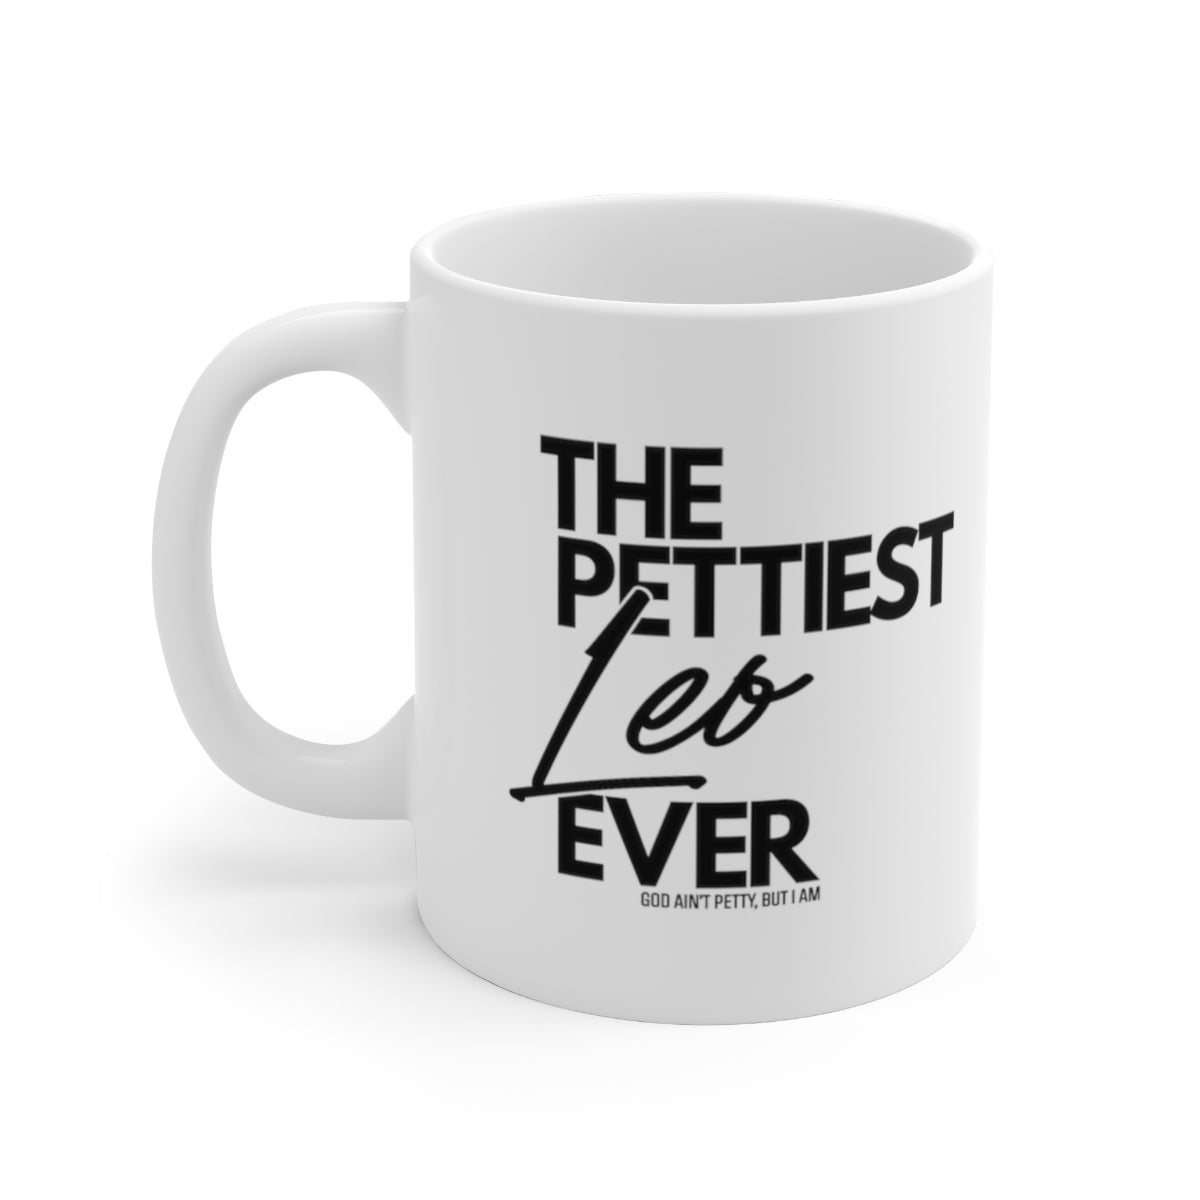 The Pettiest Leo Ever Mug 11oz (White/Black)-Mug-The Original God Ain't Petty But I Am